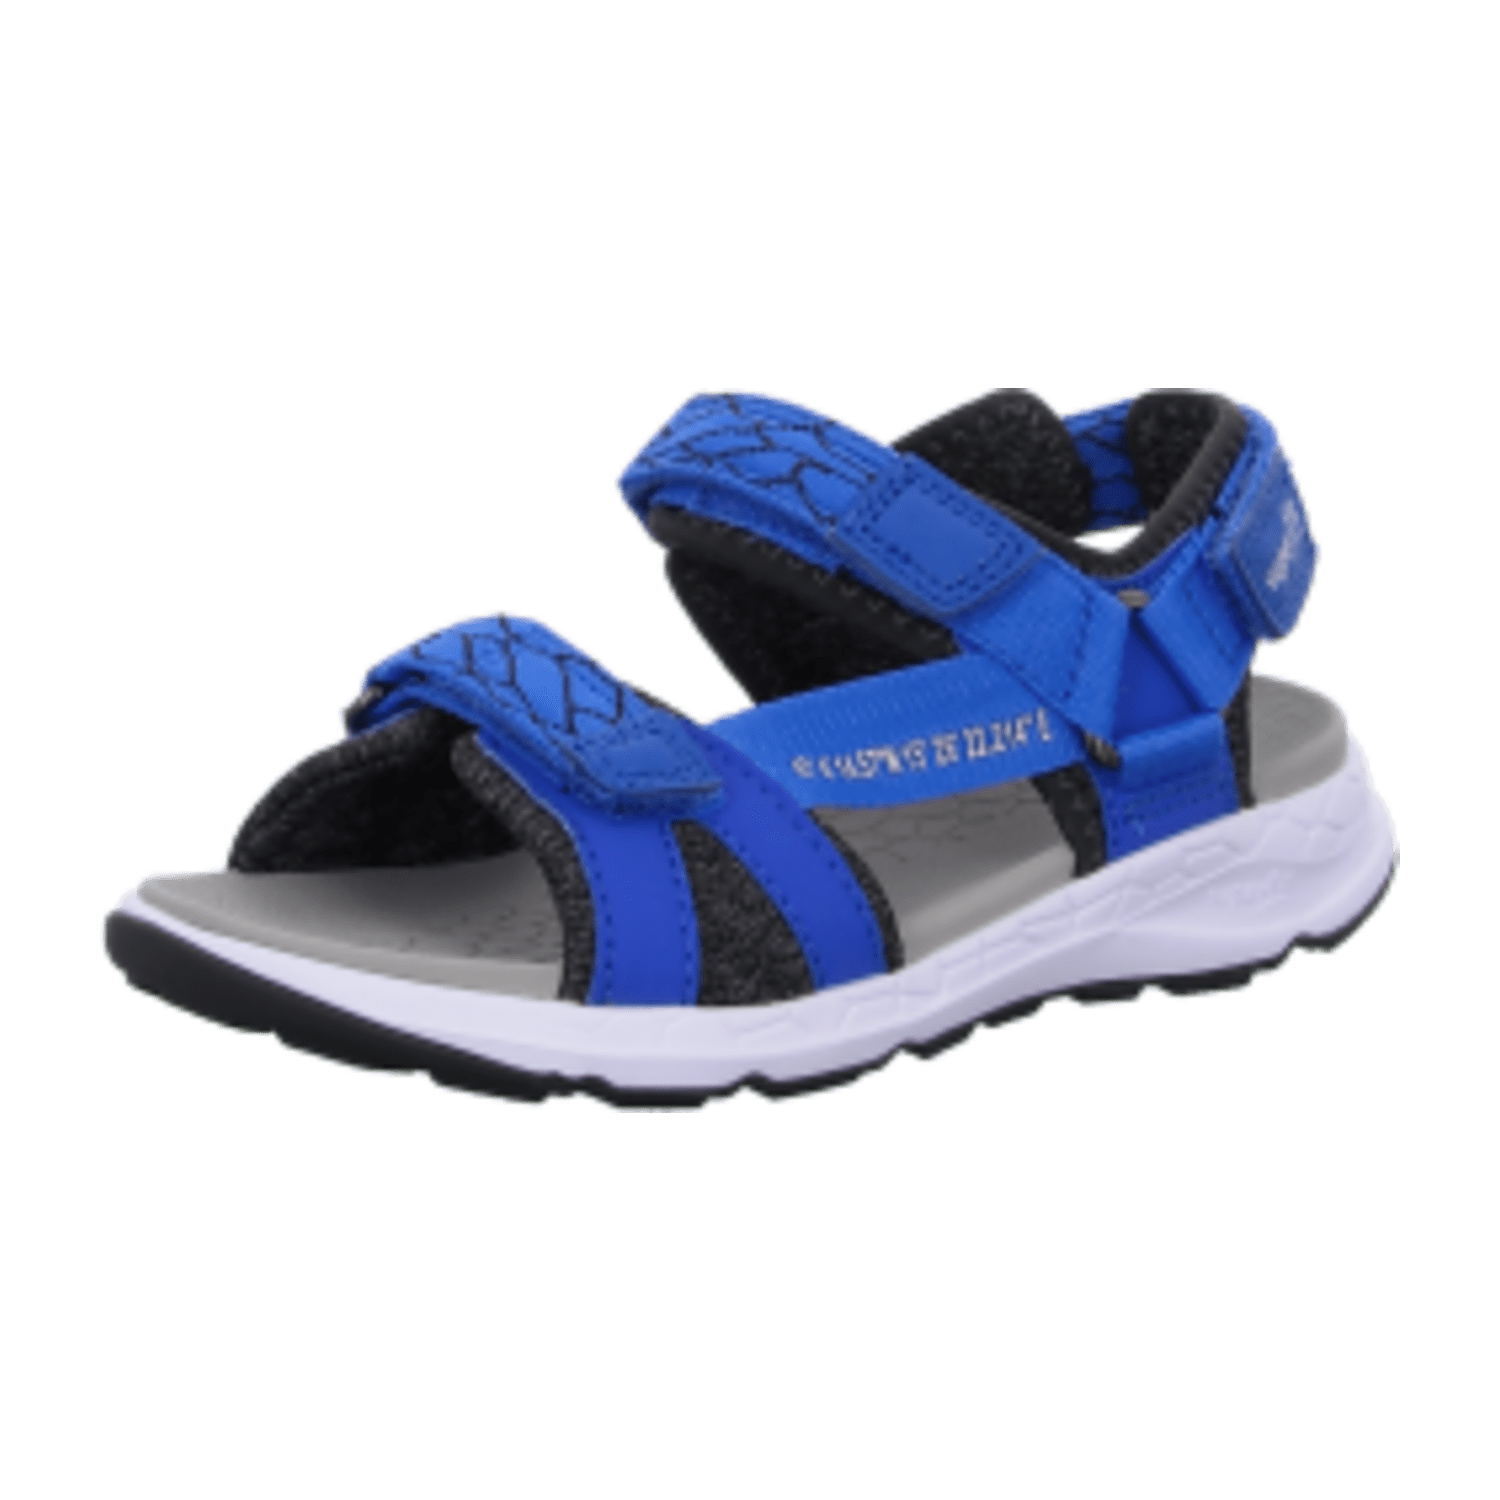 Superfit Sandale Synthetik  CRISS CROS 1-000580-8020 Blau/grau